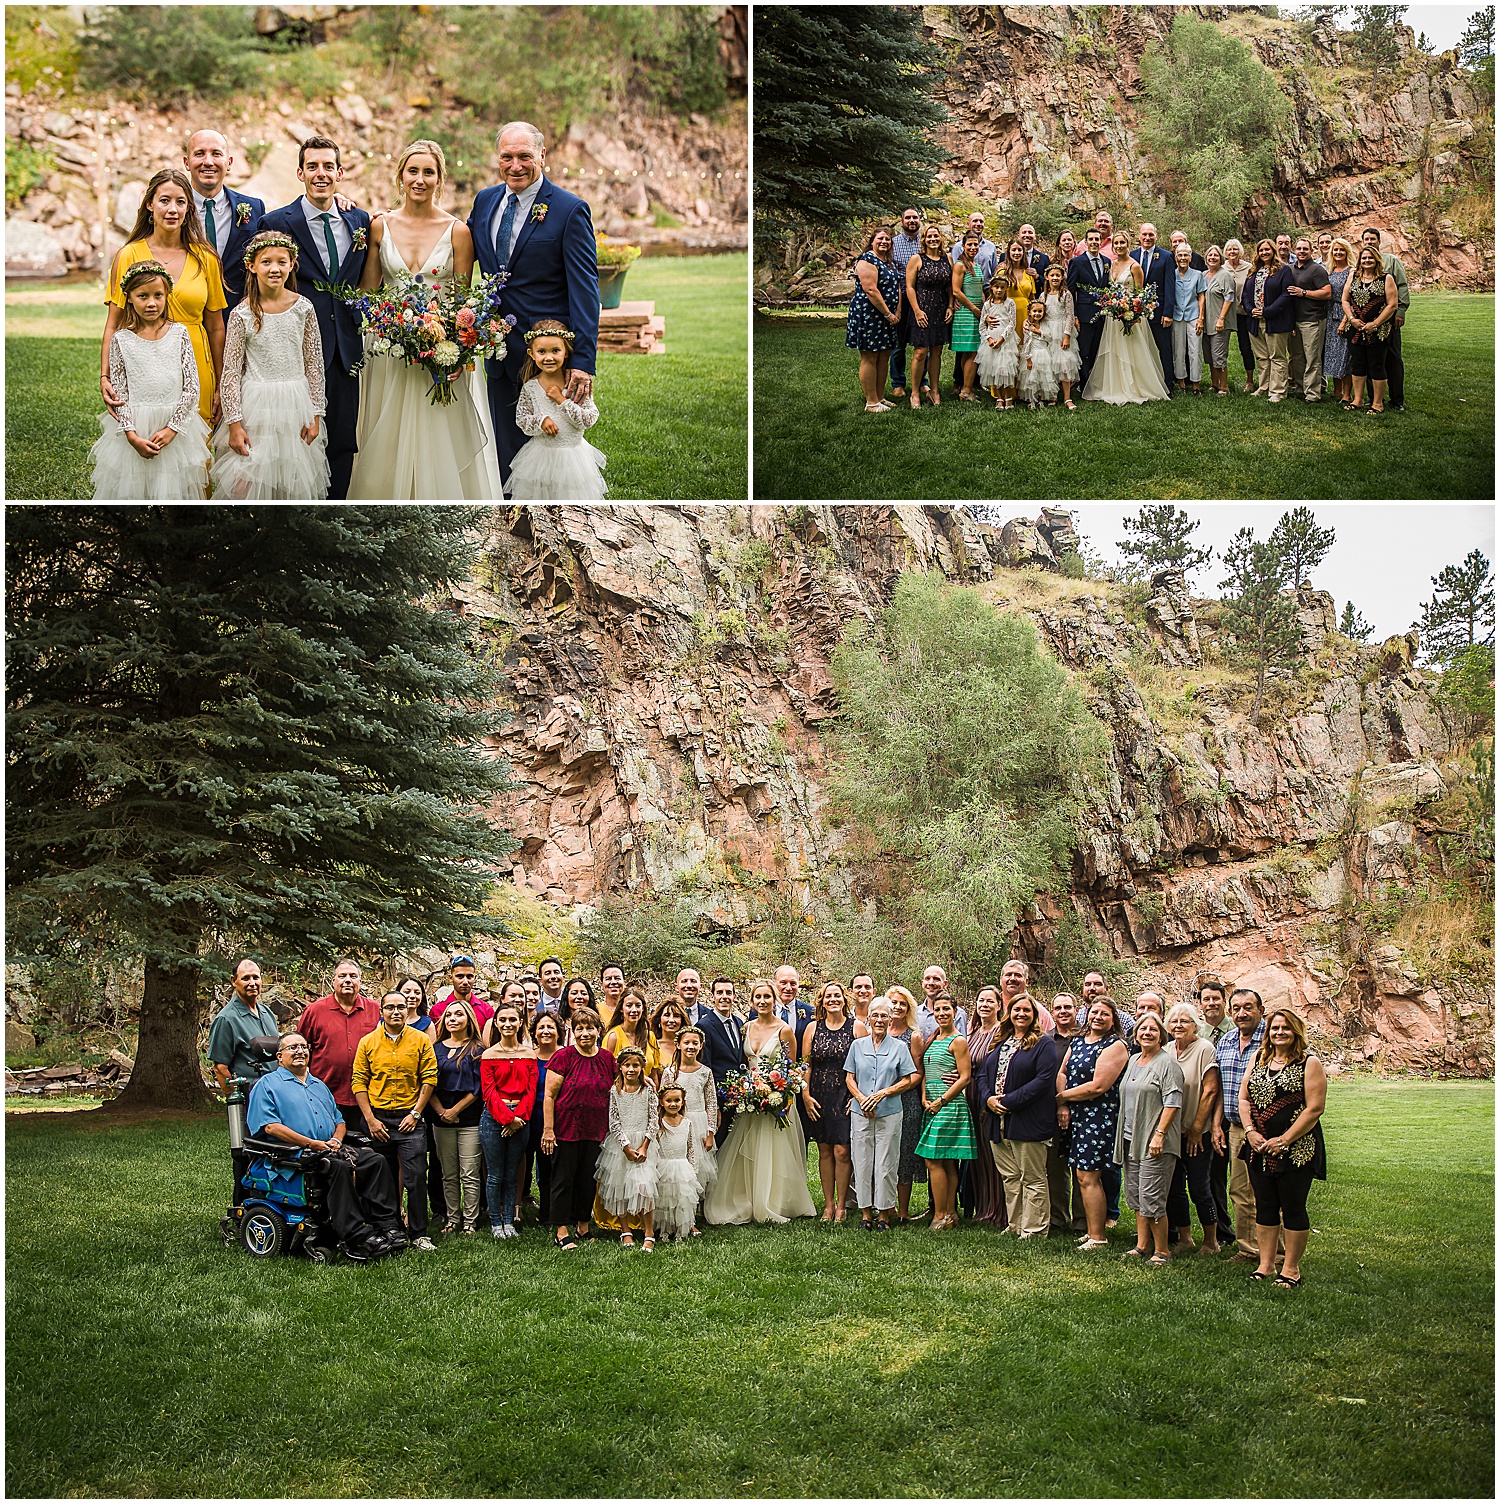 River Bend Outdoor Summer Wedding Photos, Lyons Colorado Photographer, colorado wedding photographer, wedding photographer, outdoor wedding style, lyons farmette, wedding details, family portraits, large group photos